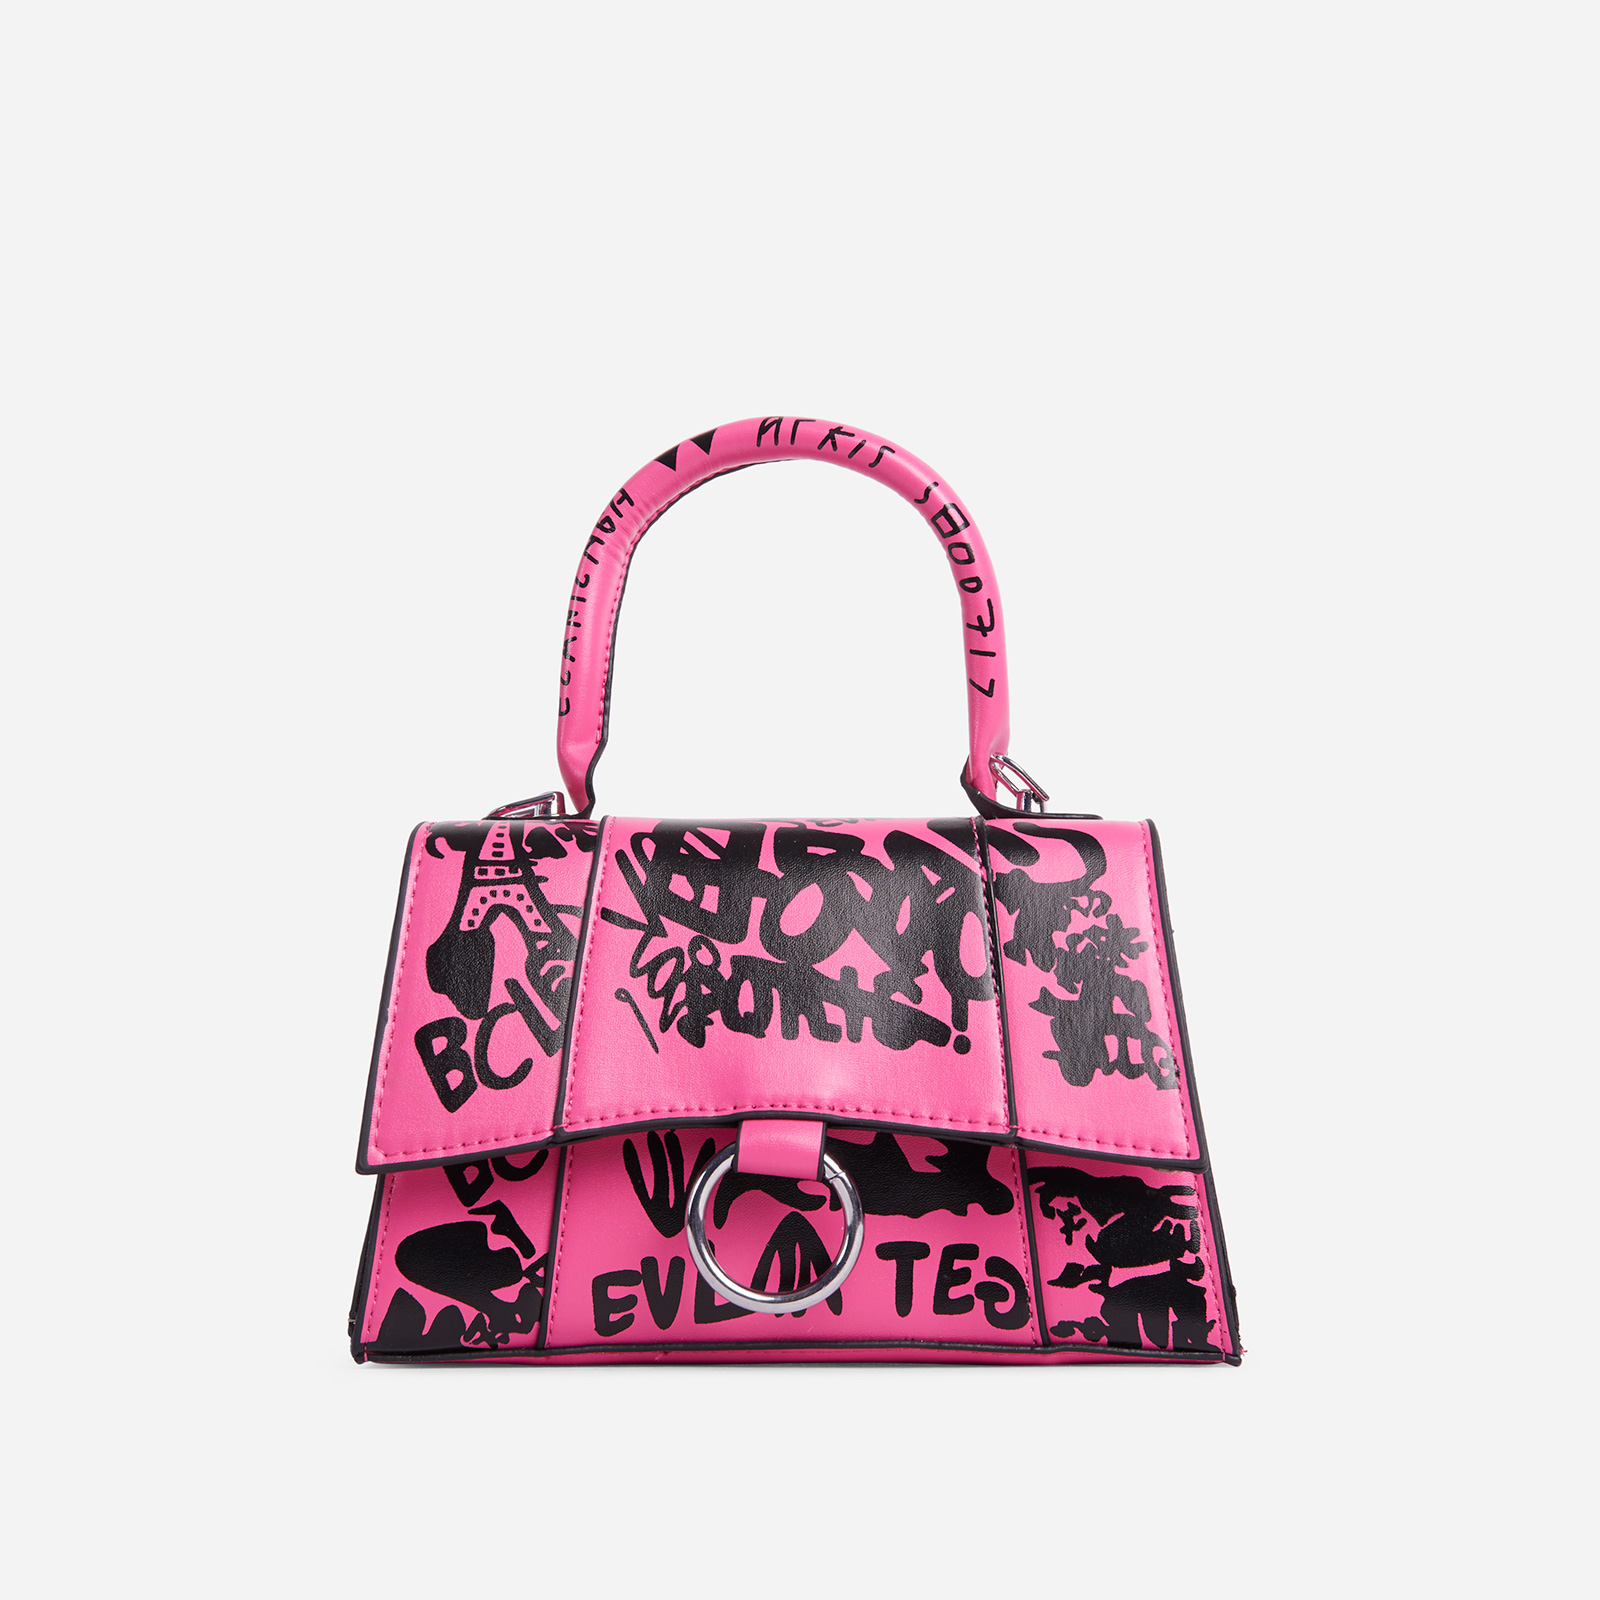 Balenciaga Hourglass Xs Graffiti Print Tote in Pink